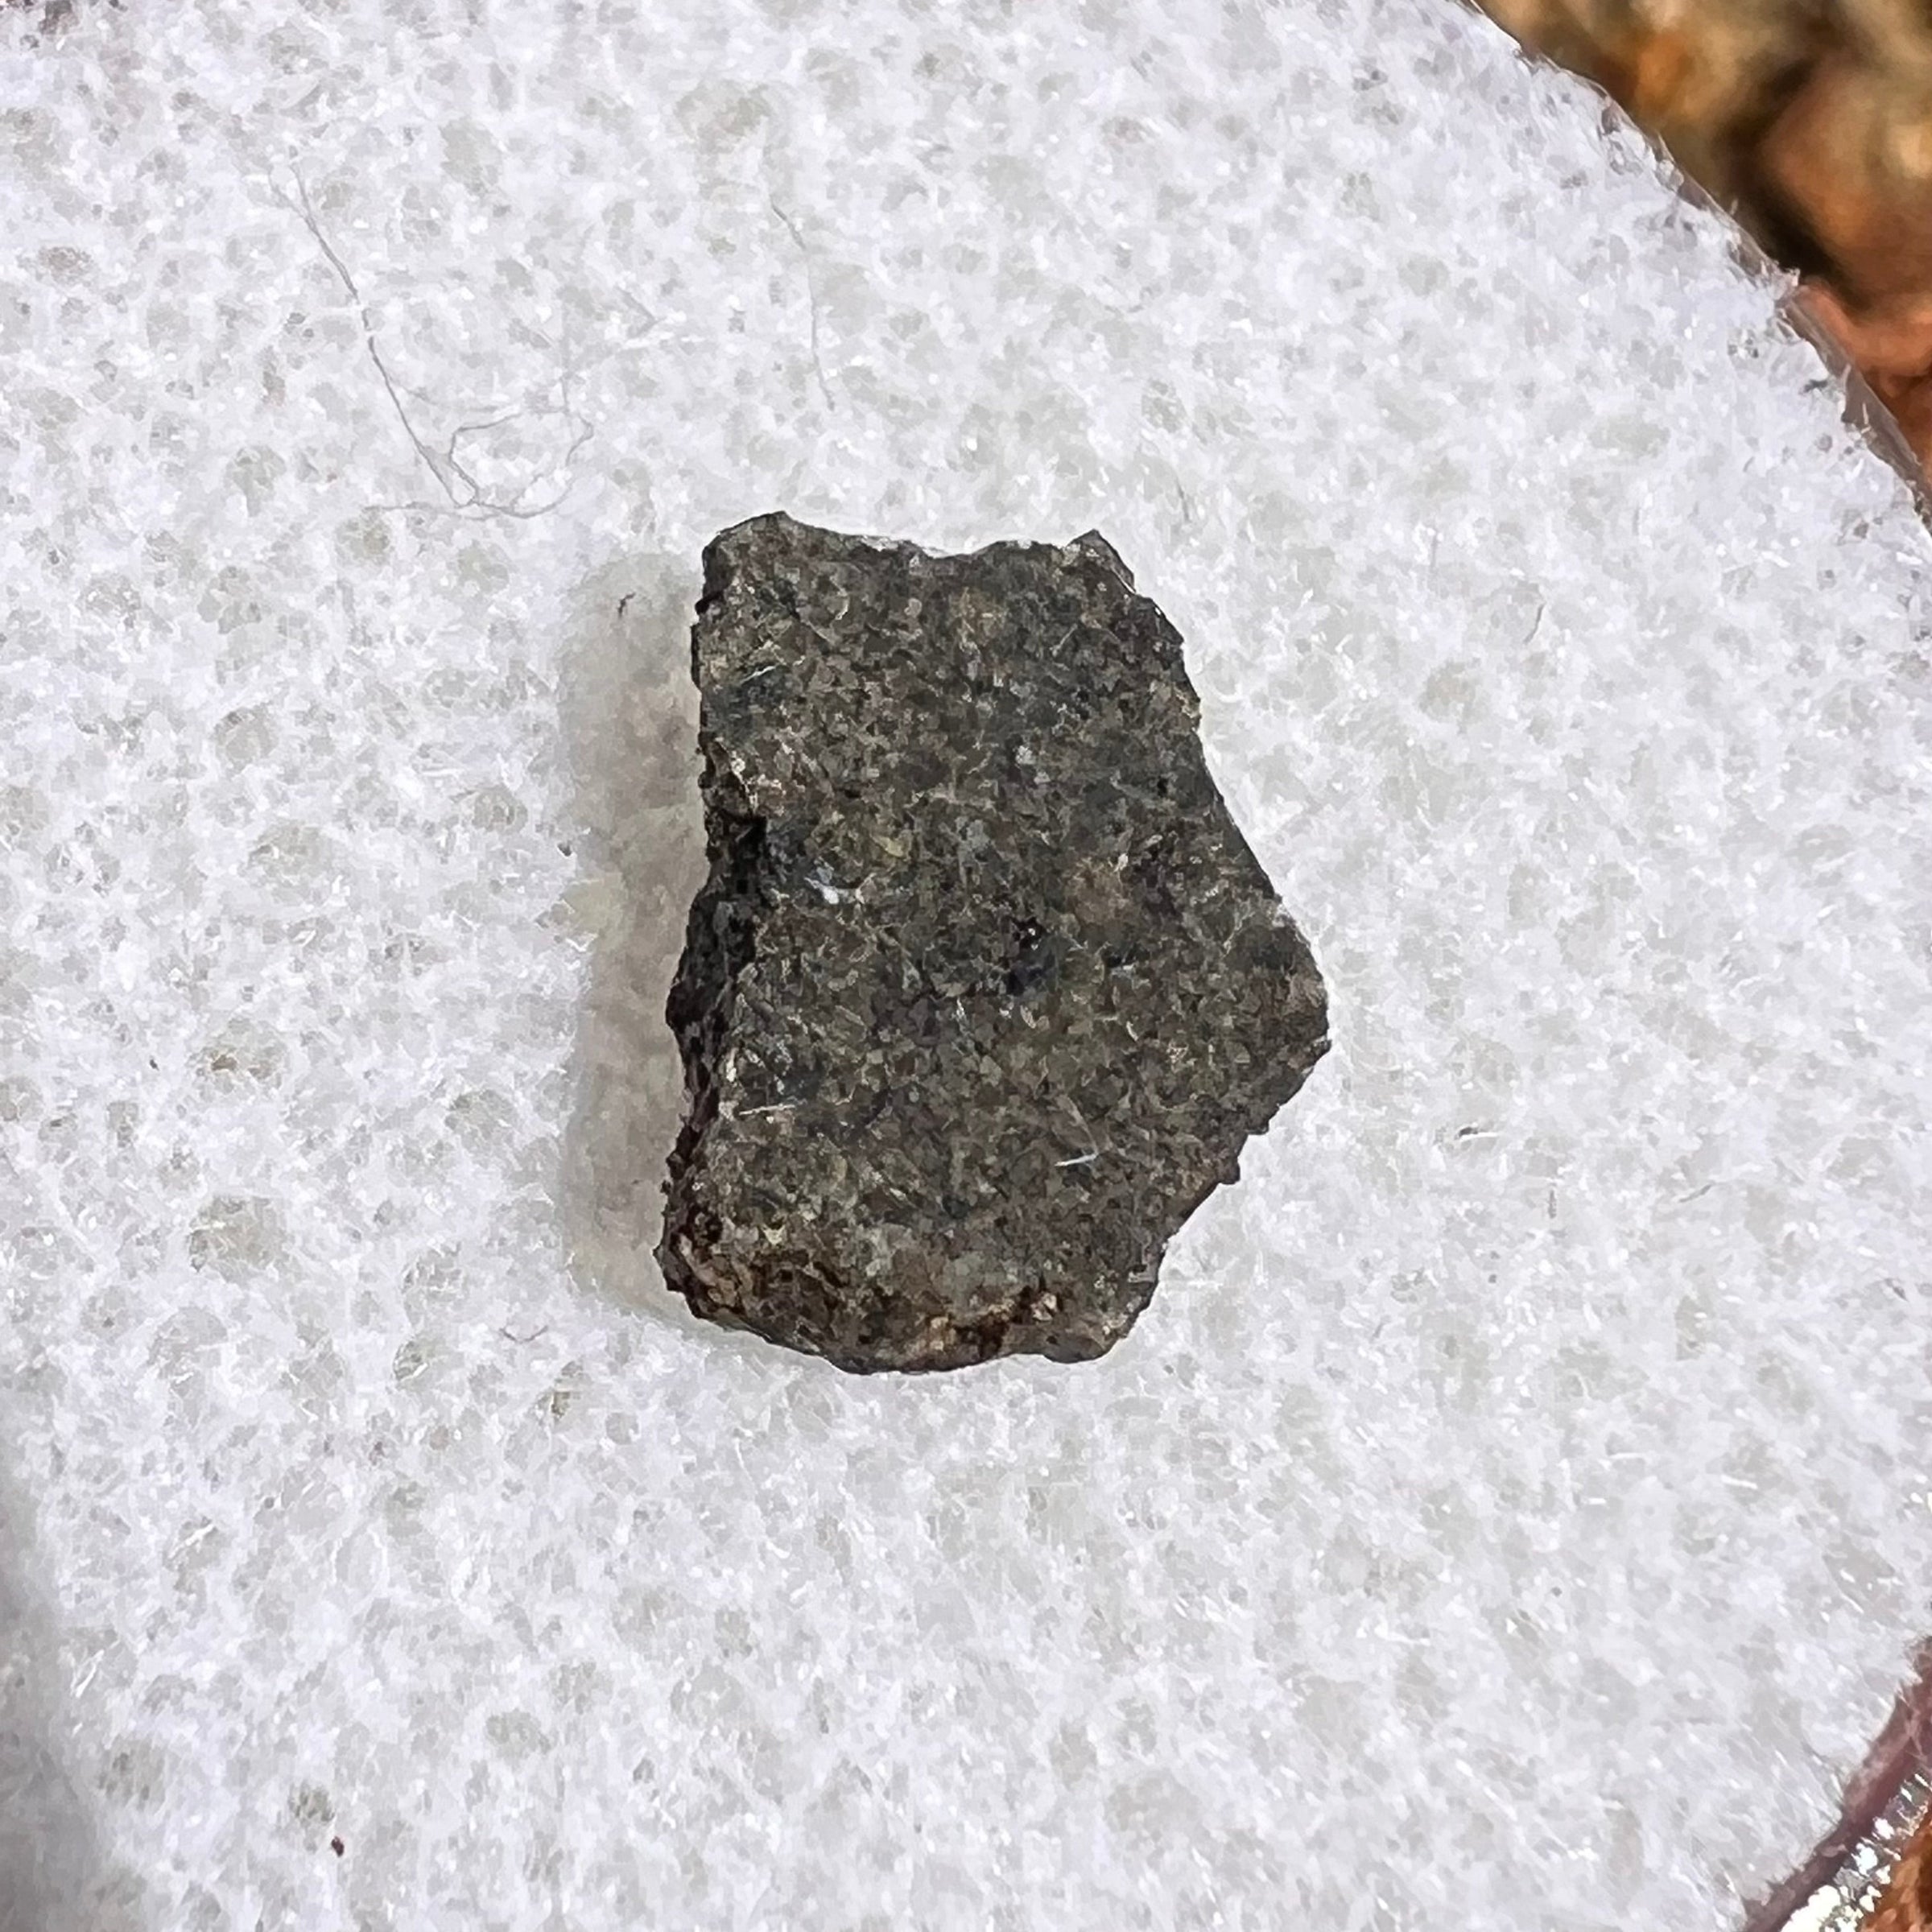 NWA 12269 Mars Meteorite small fragment #46-Moldavite Life